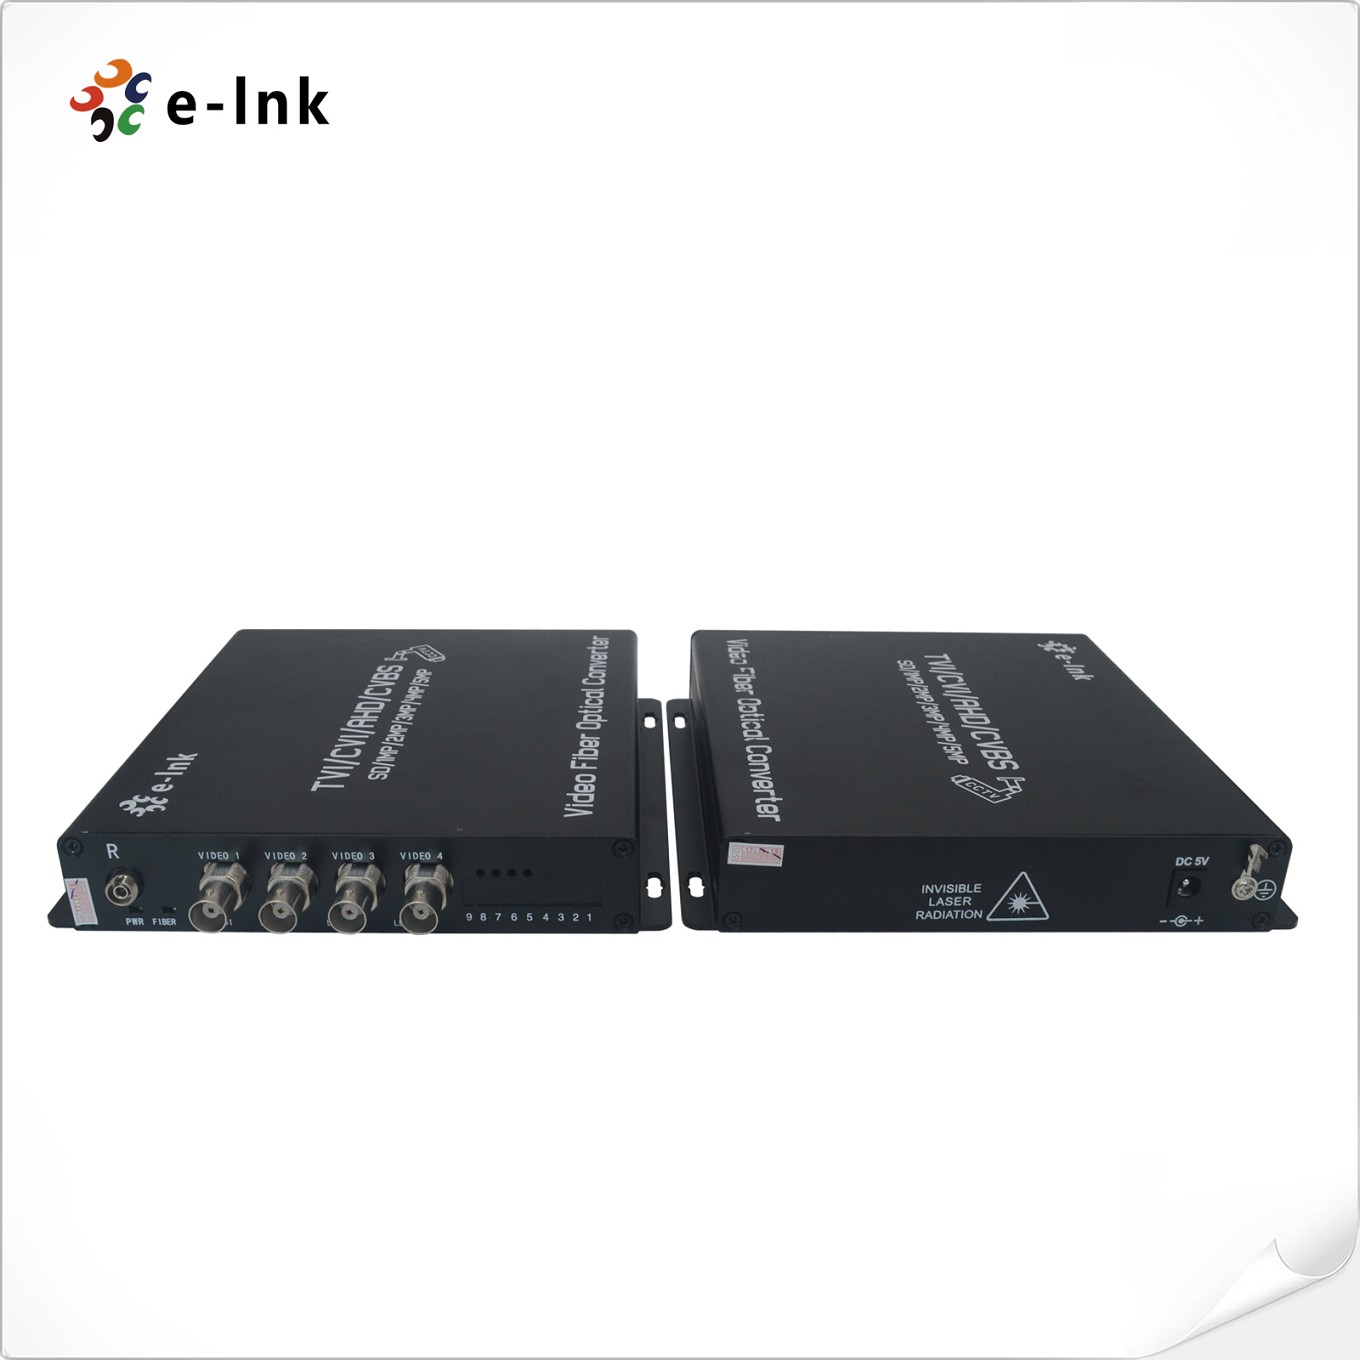 4Ch 5MP HD-AHD/HD-CVI/HD-TVI/CVBS 4-in-1 Video Fiber Converter